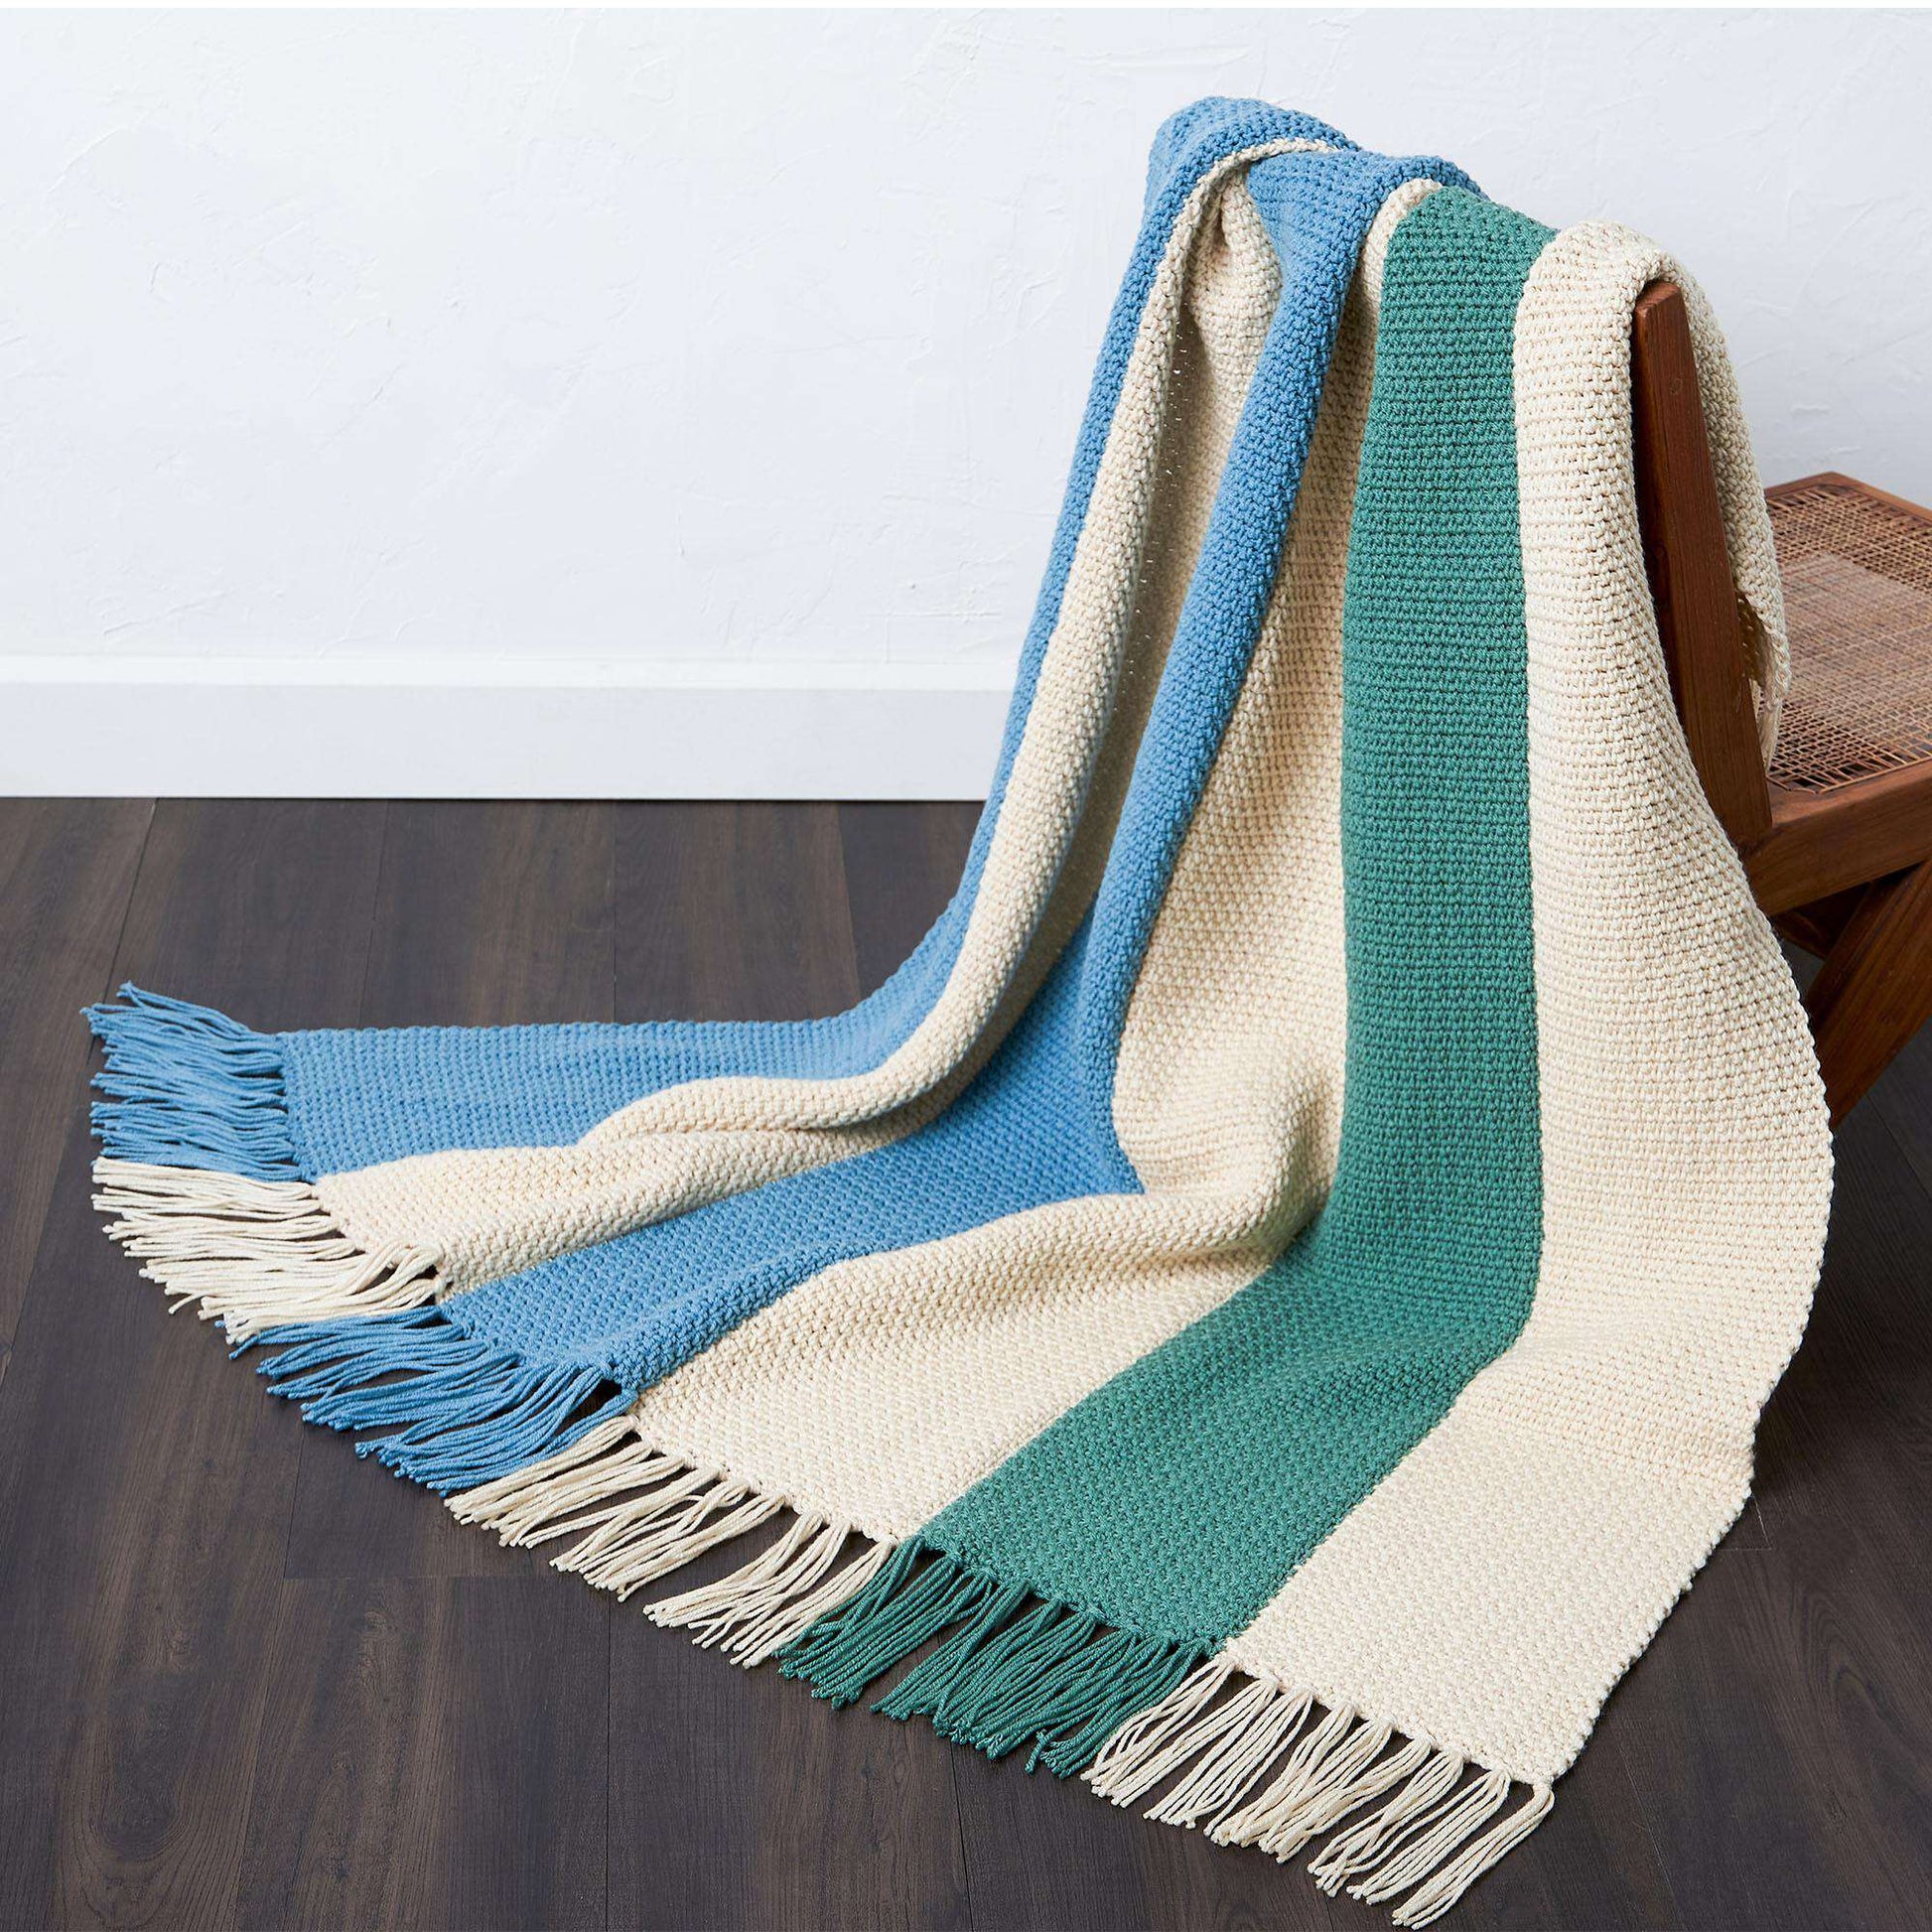 Free Caron Vertical Stripes Crochet Blanket Pattern